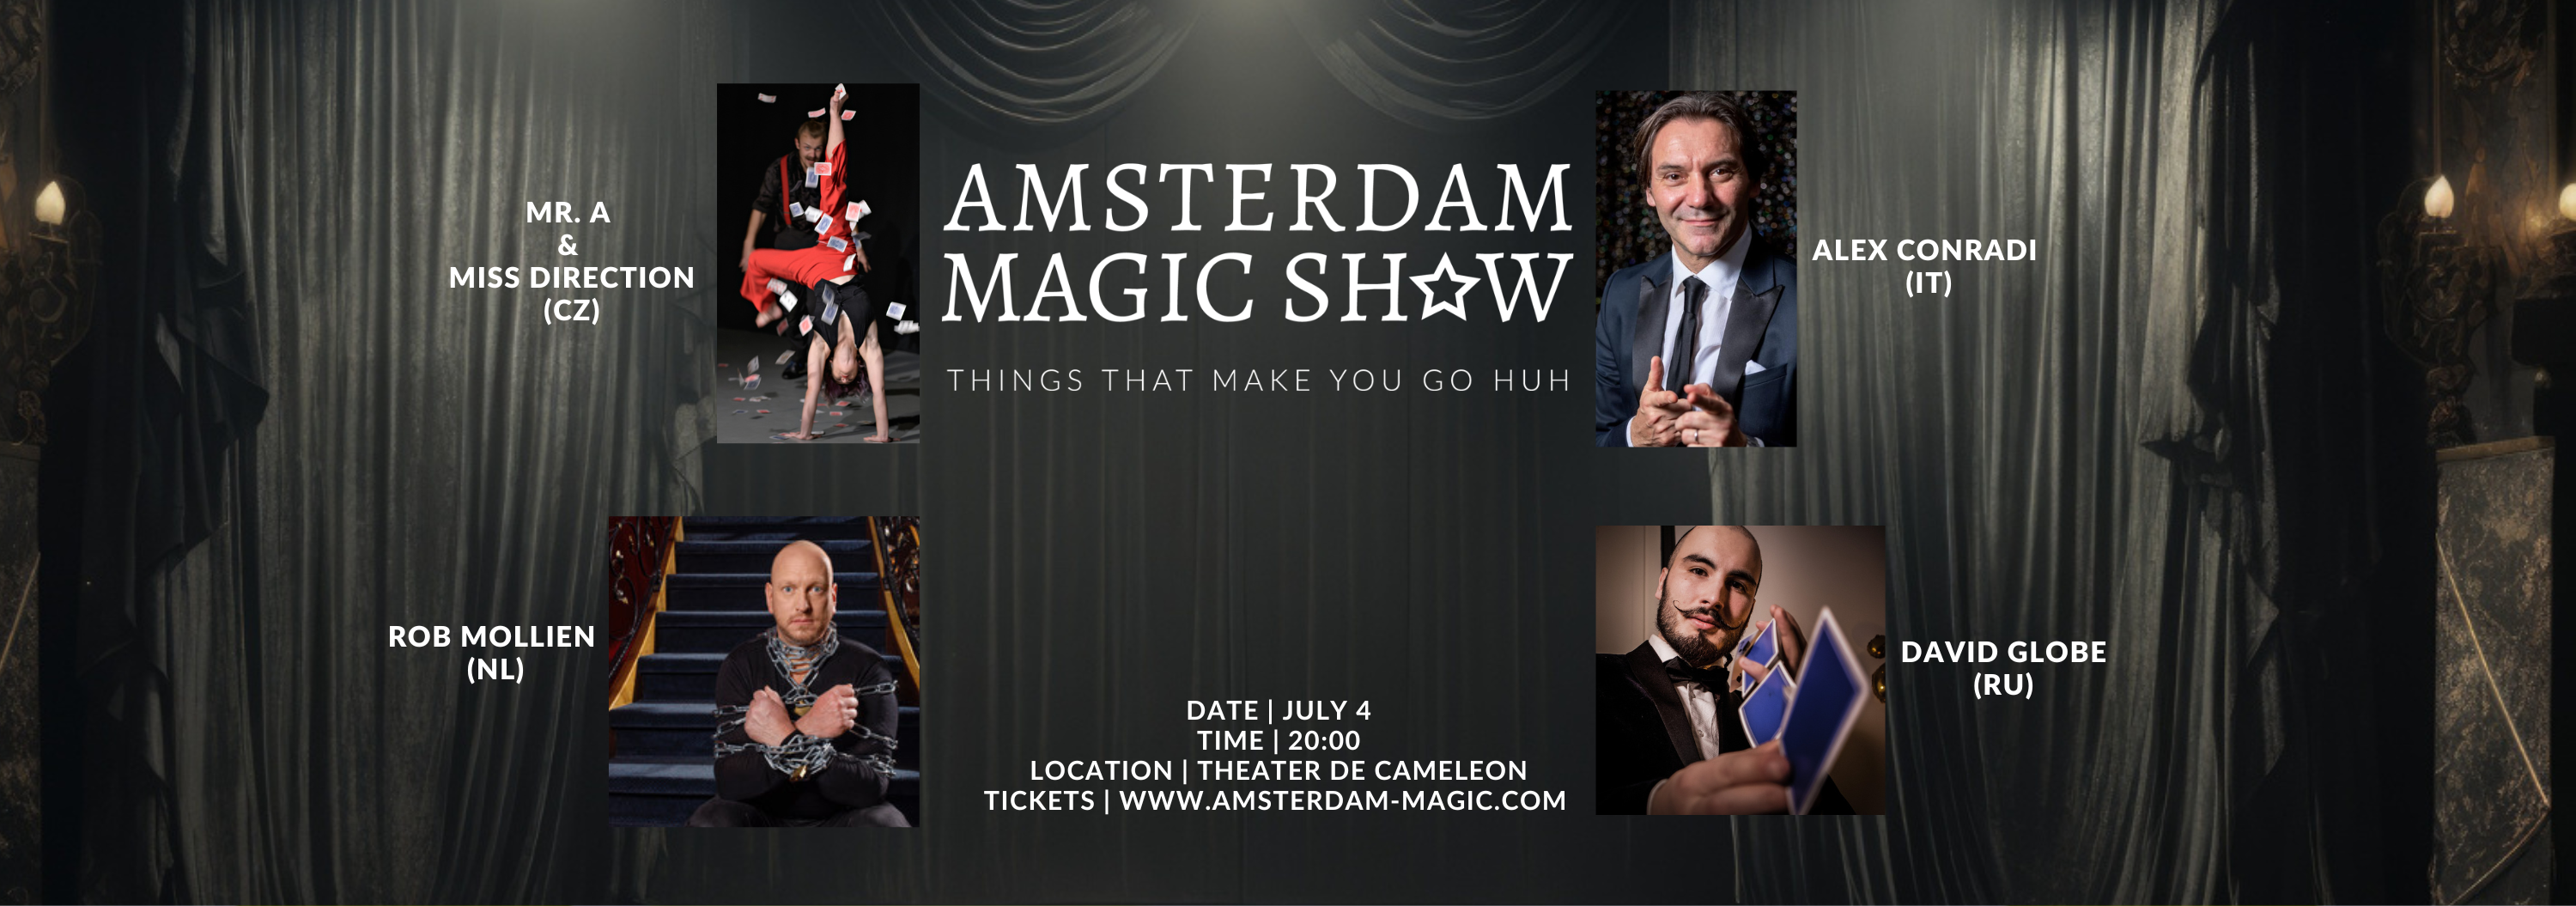 Amsterdam Magic Show